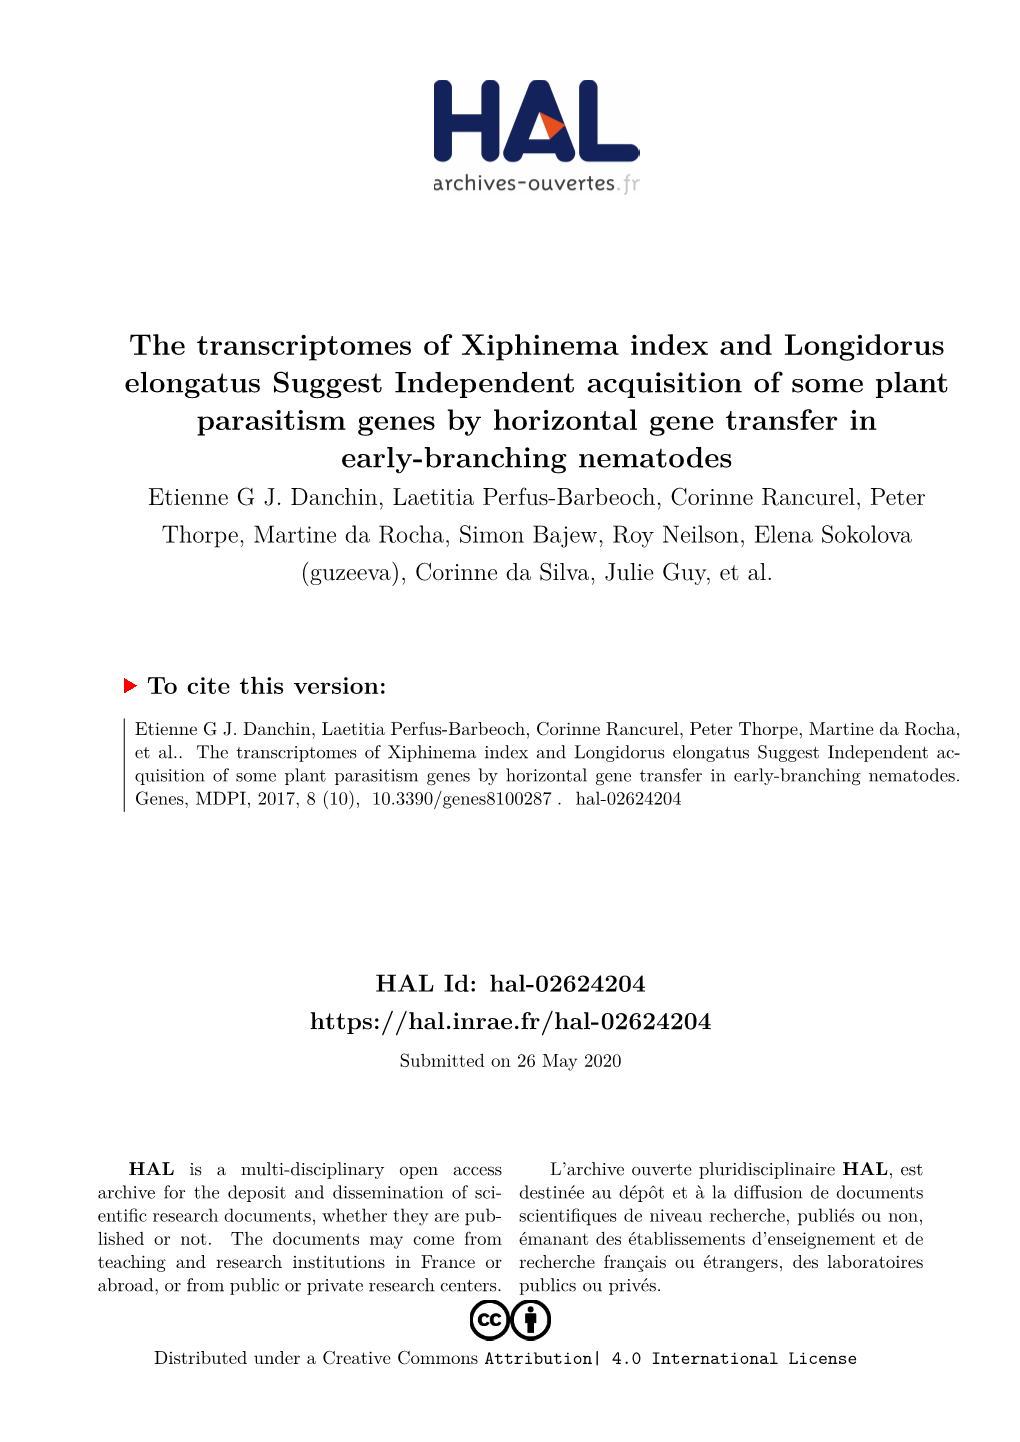 The Transcriptomes of Xiphinema Index and Longidorus